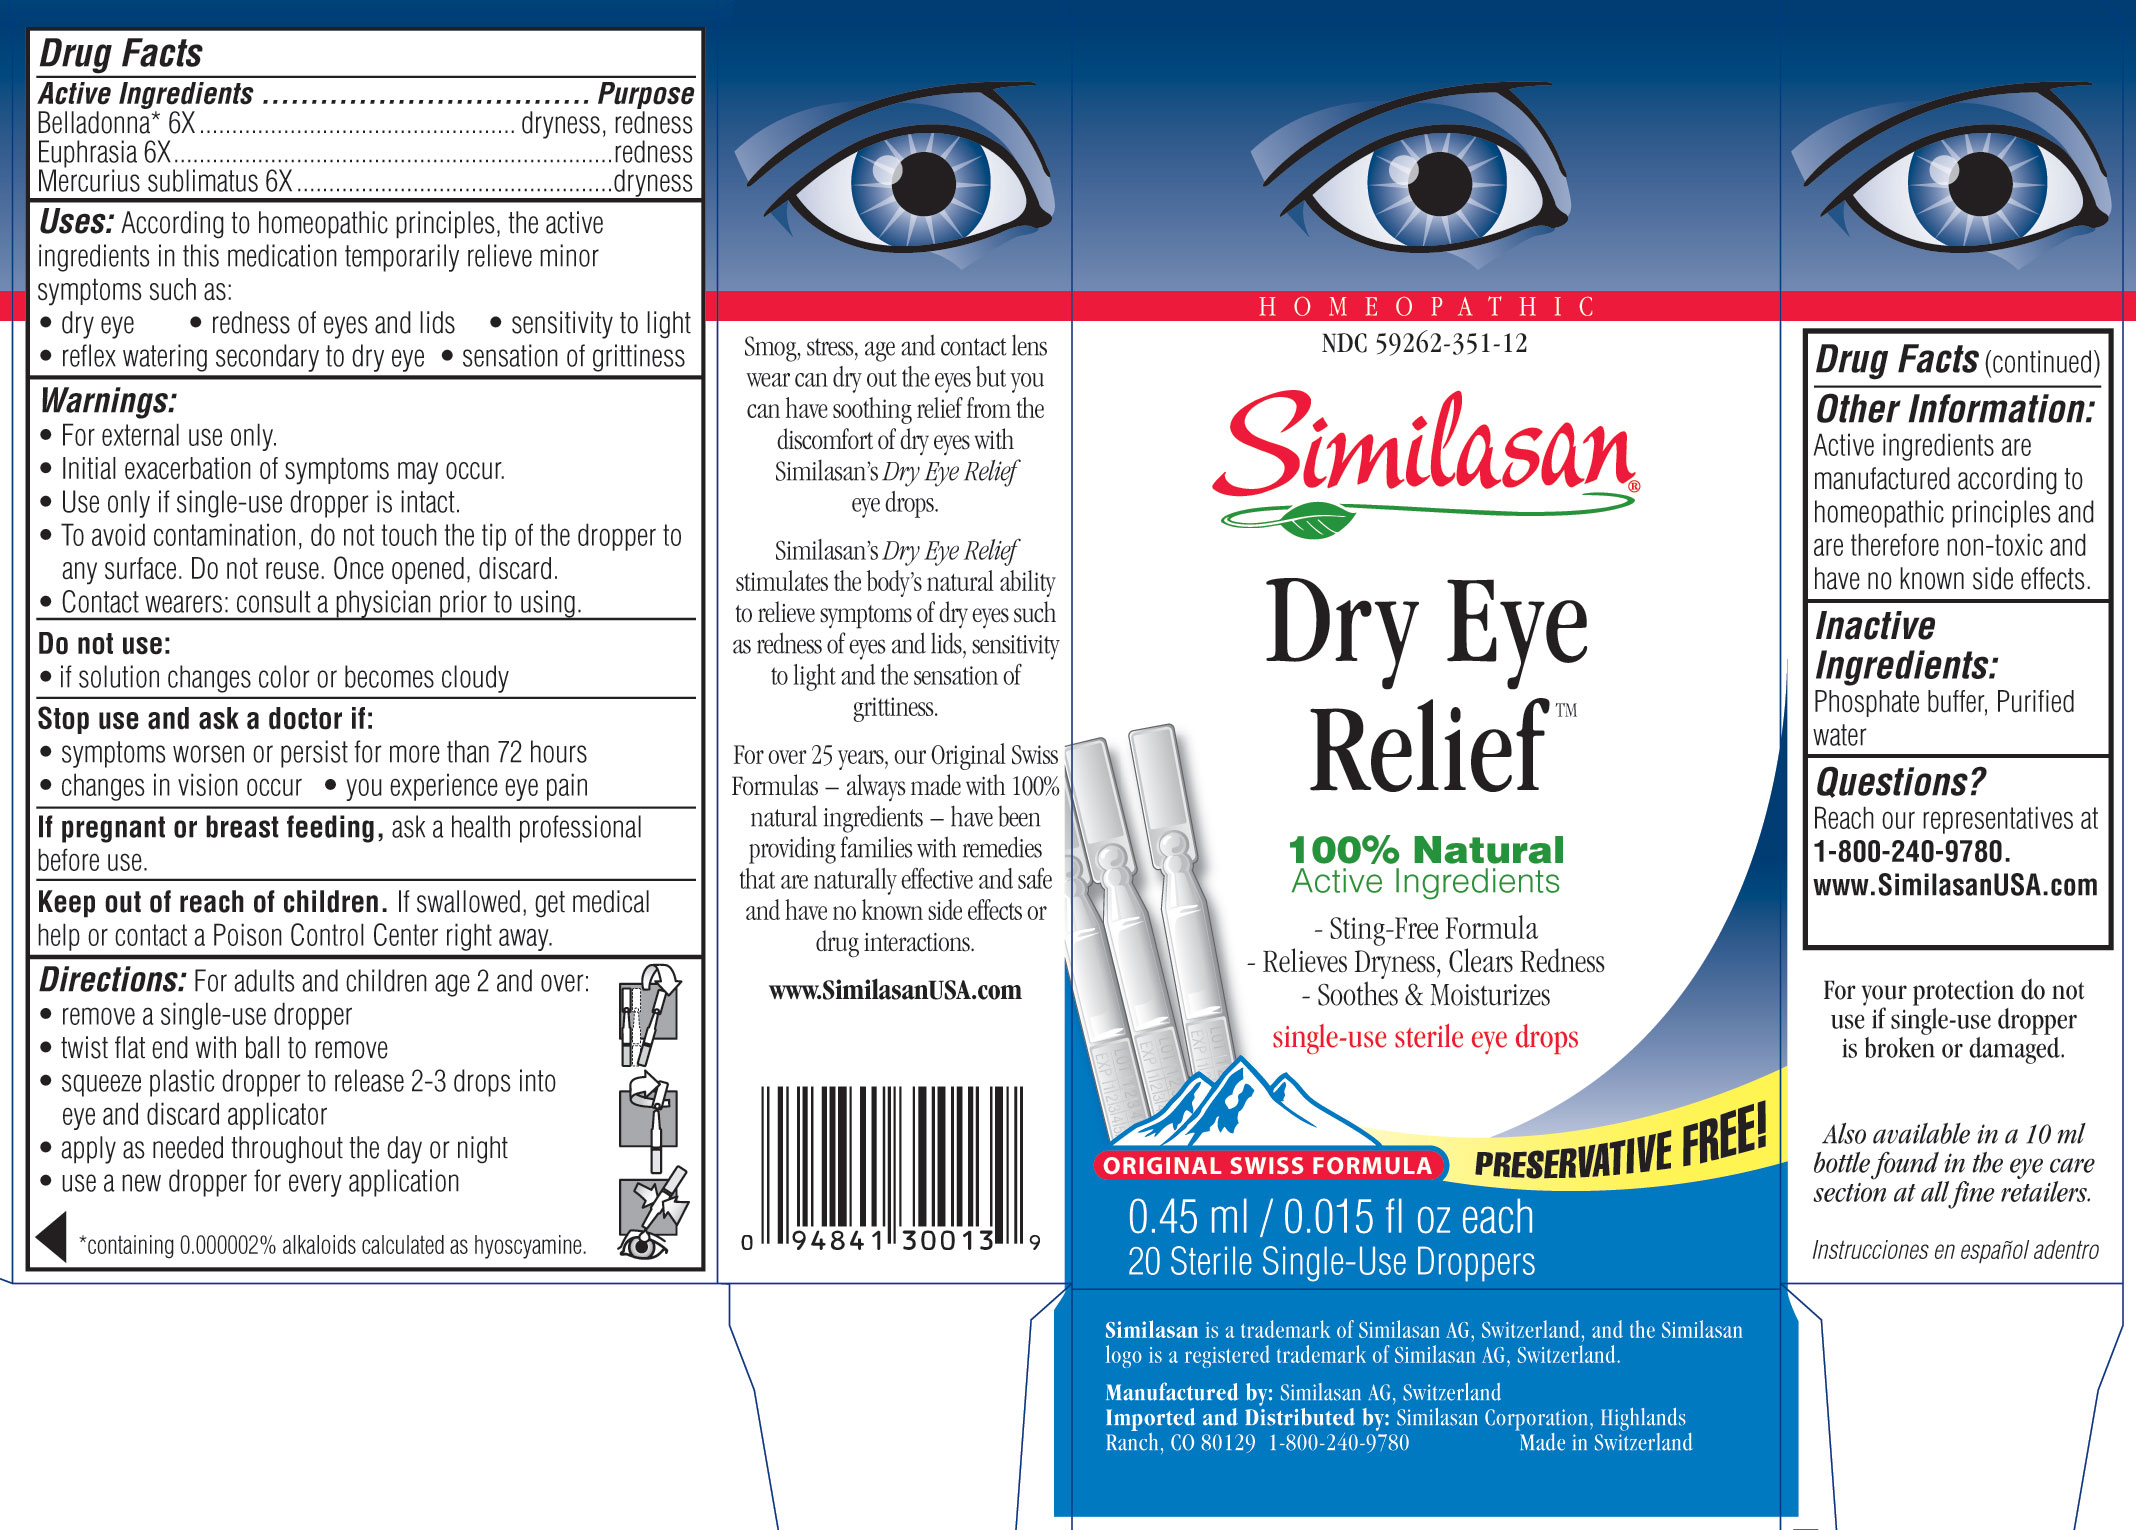 Dry Eye Preservative Free Box